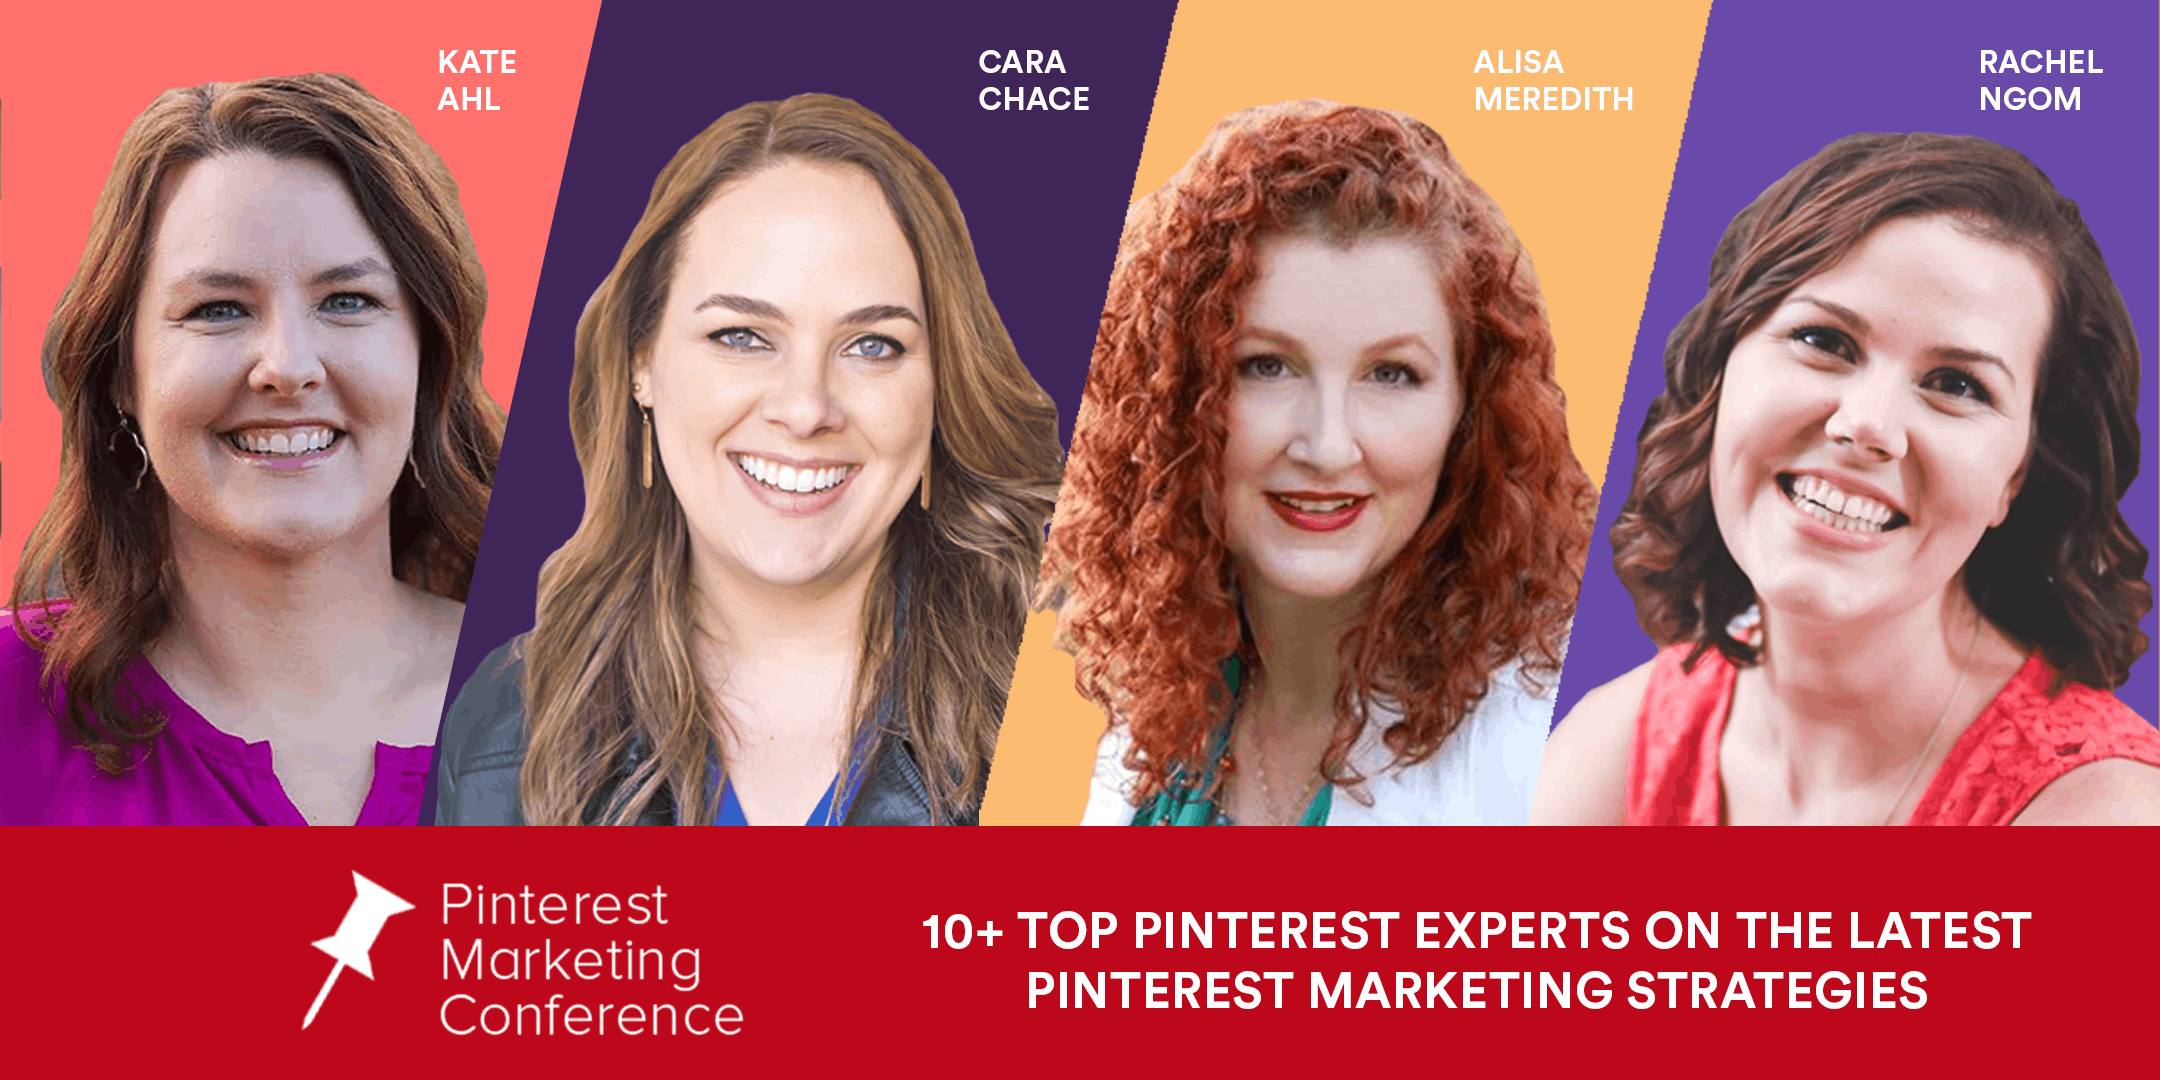 Pinterest Marketing Conference 2019 (Online Conference)